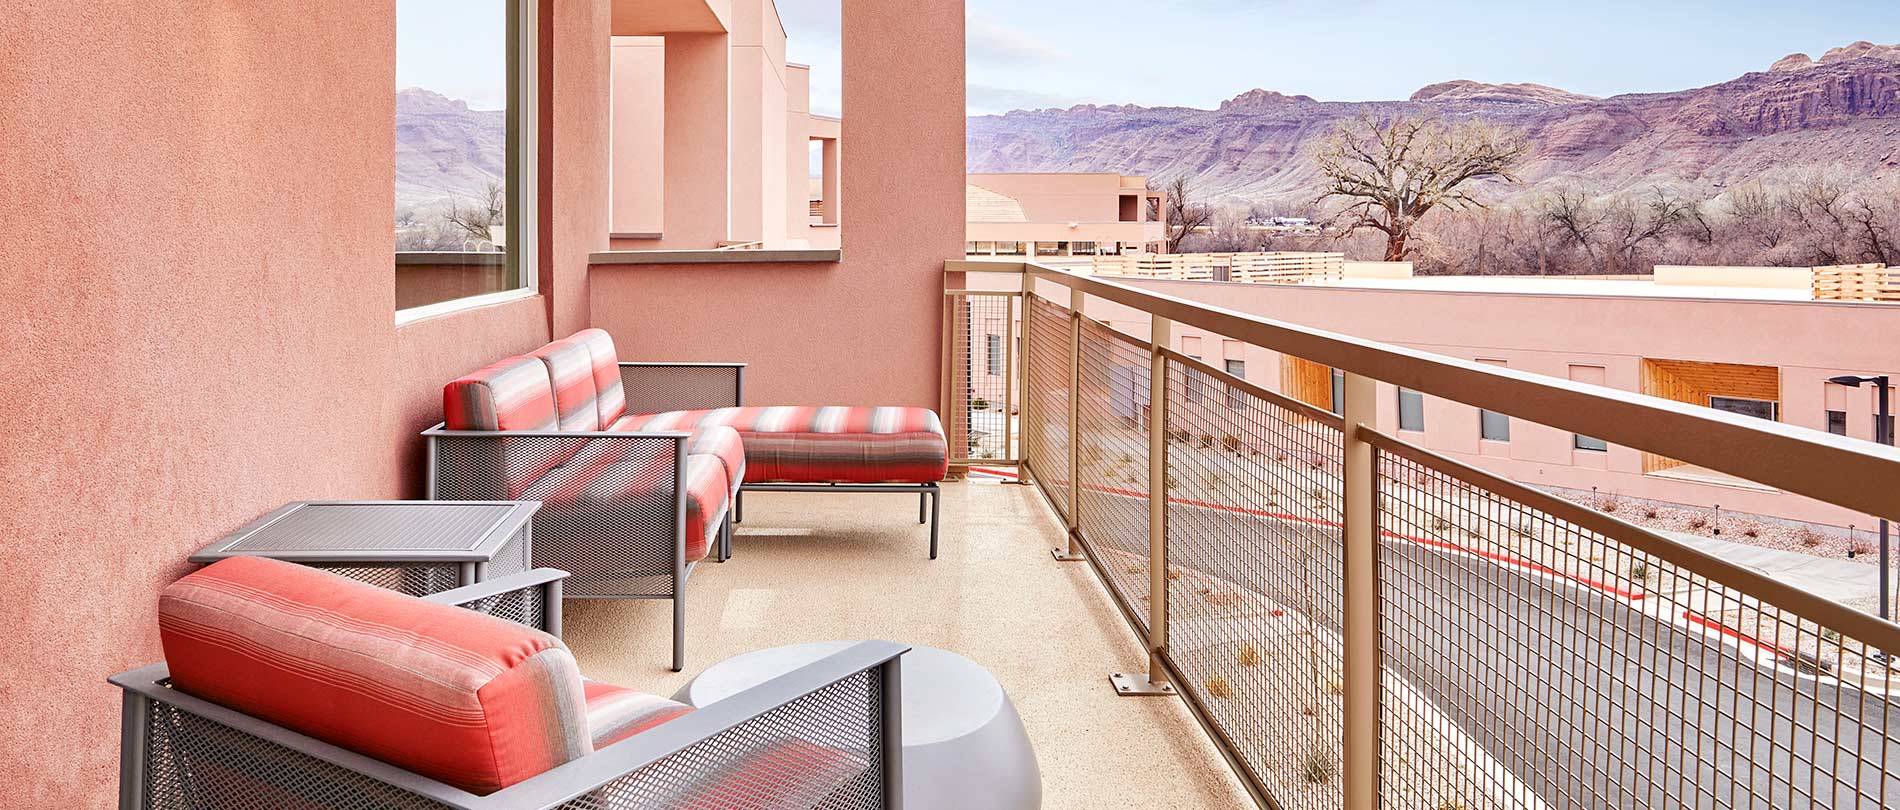 Balcony - Worldmark Moab